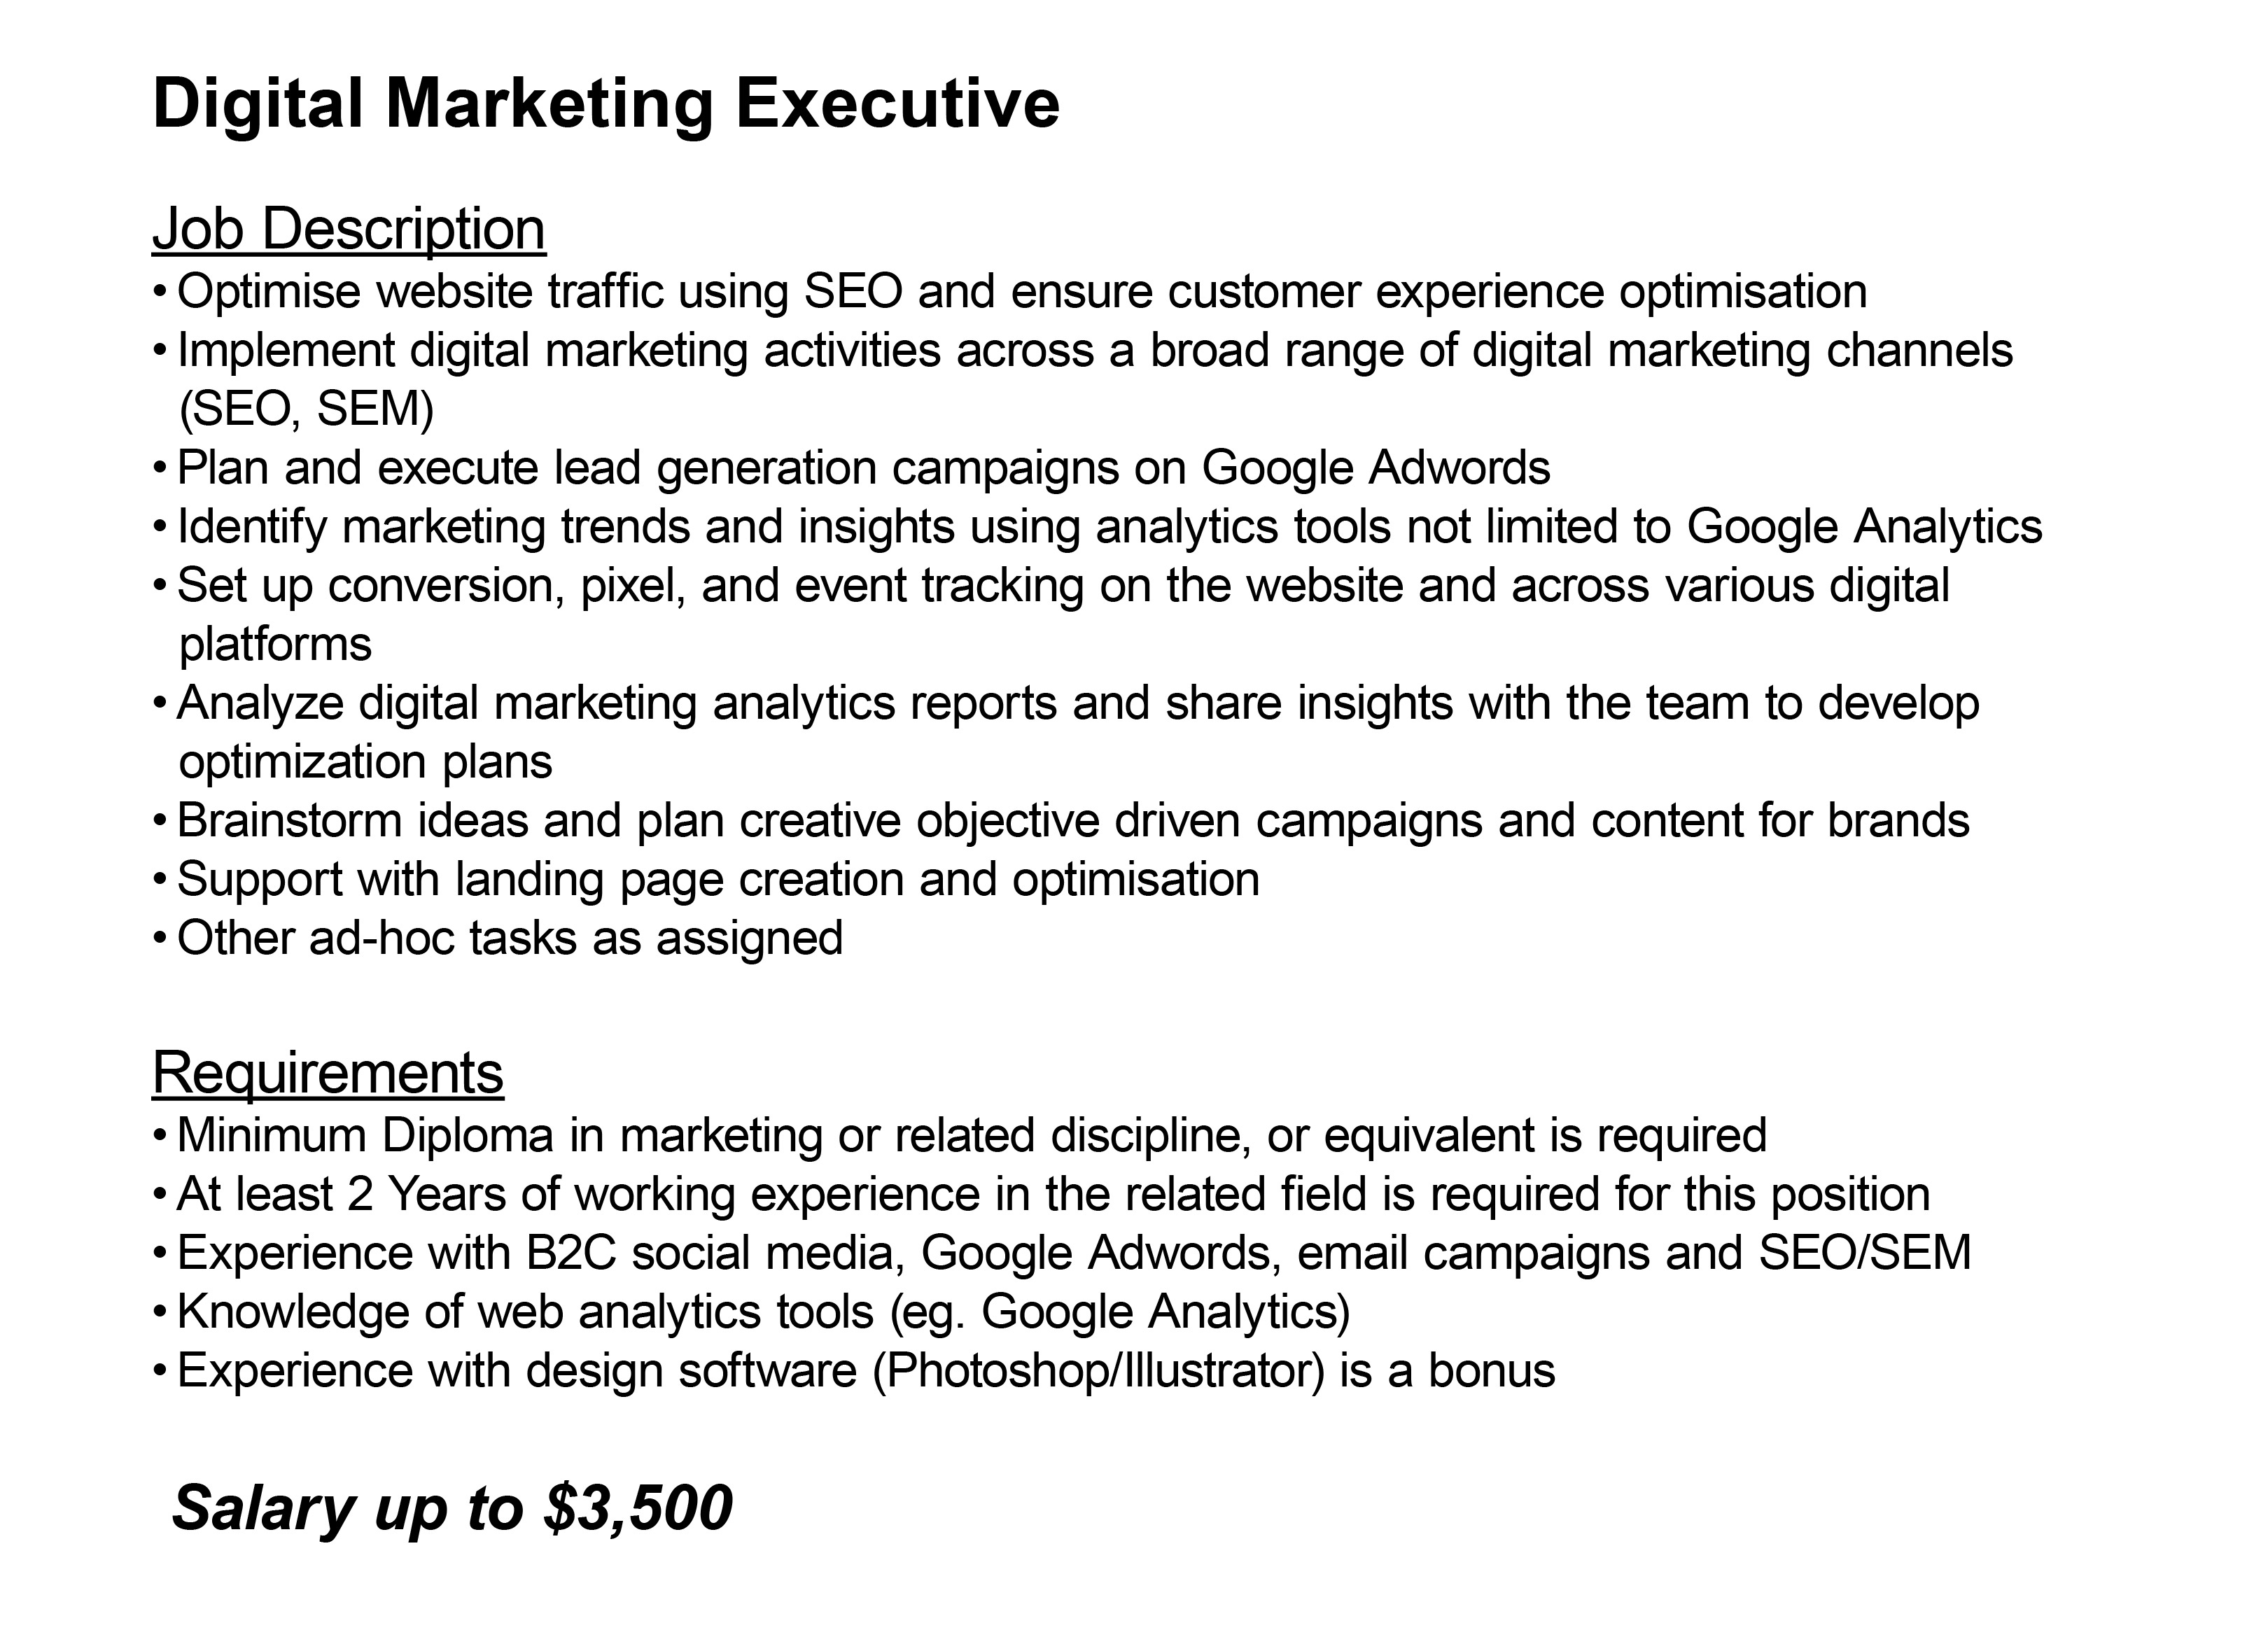 Recruitments_YMS_Digital Marketing Executive